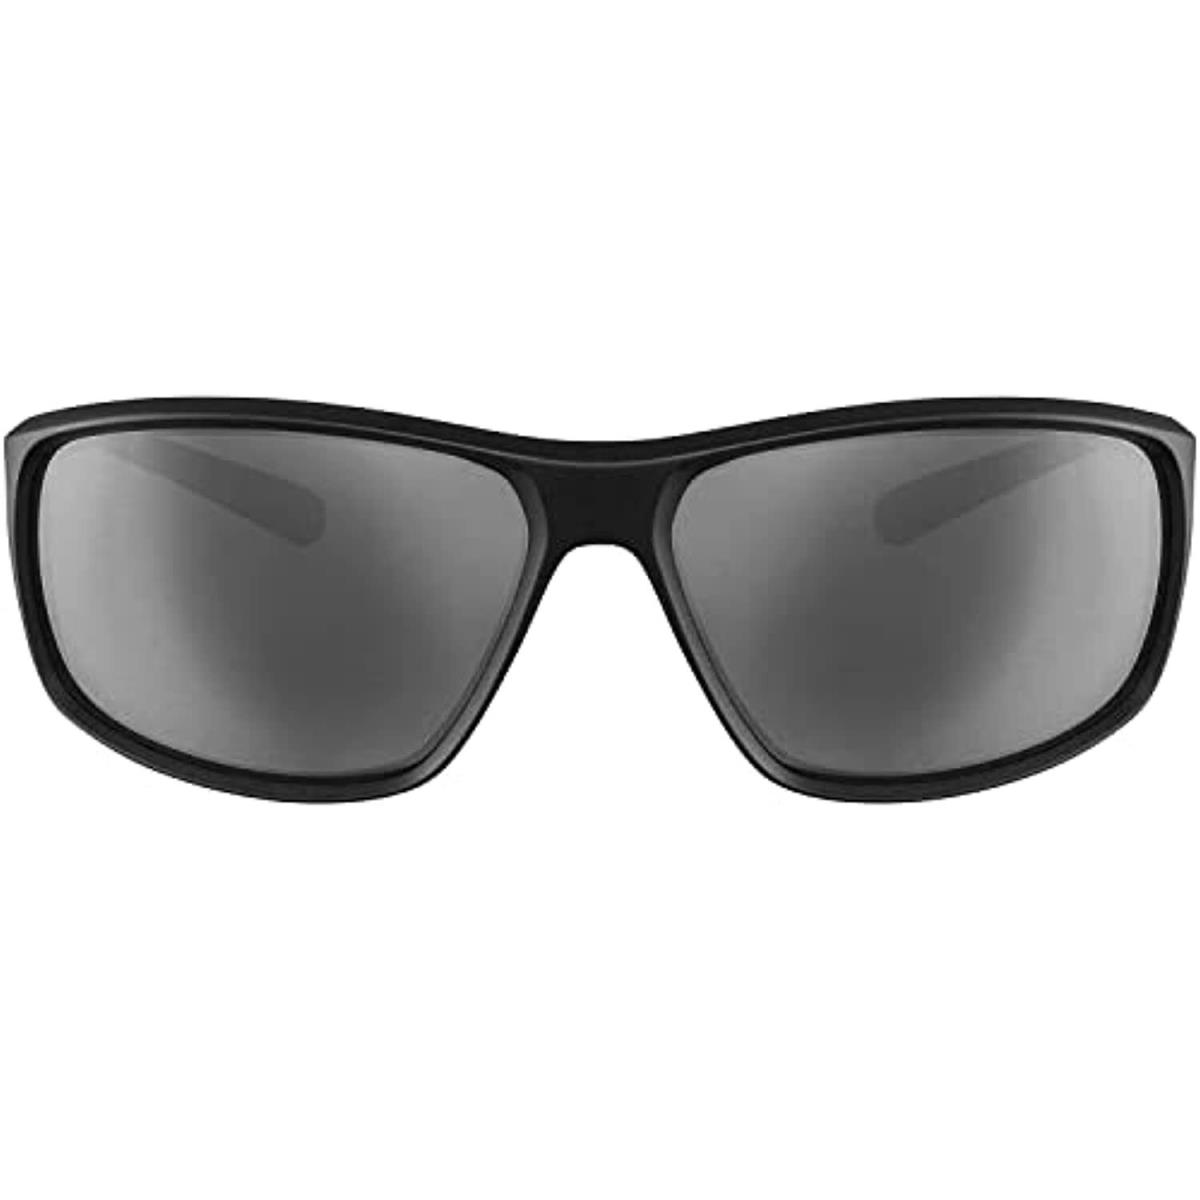 Nike Men Sunglasses EV1134-010 Adrenaline Matte Anthracite/silver Mirrored Wrap - Frame: Gray